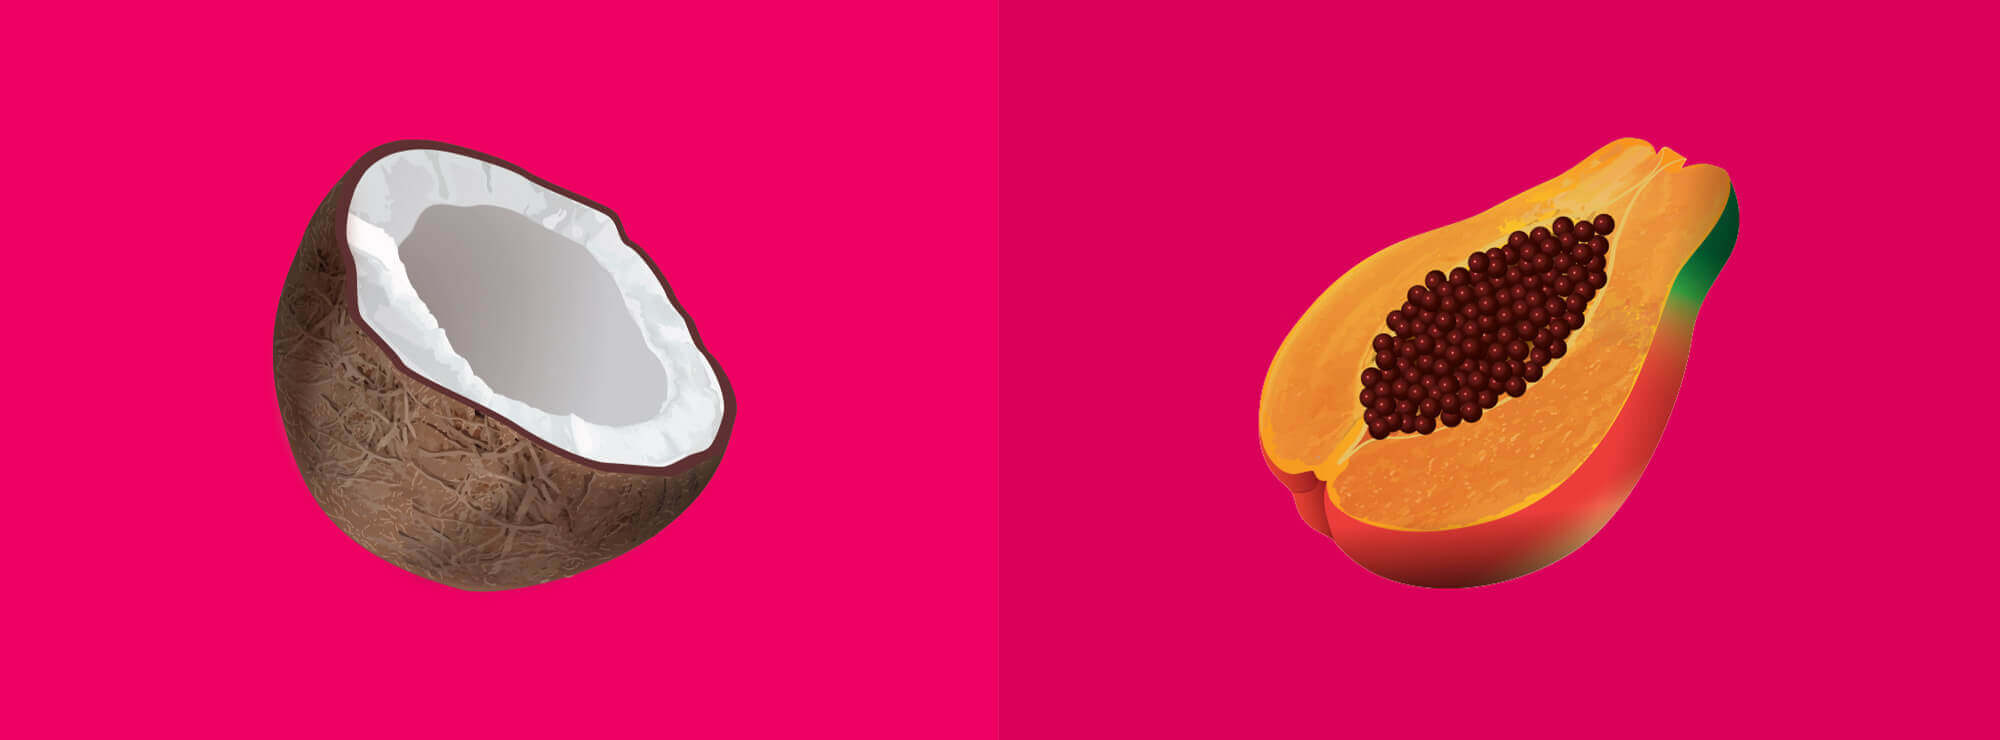 03 canal  emojis canalbox media emoticones fruits exotique illustration texture.jpg